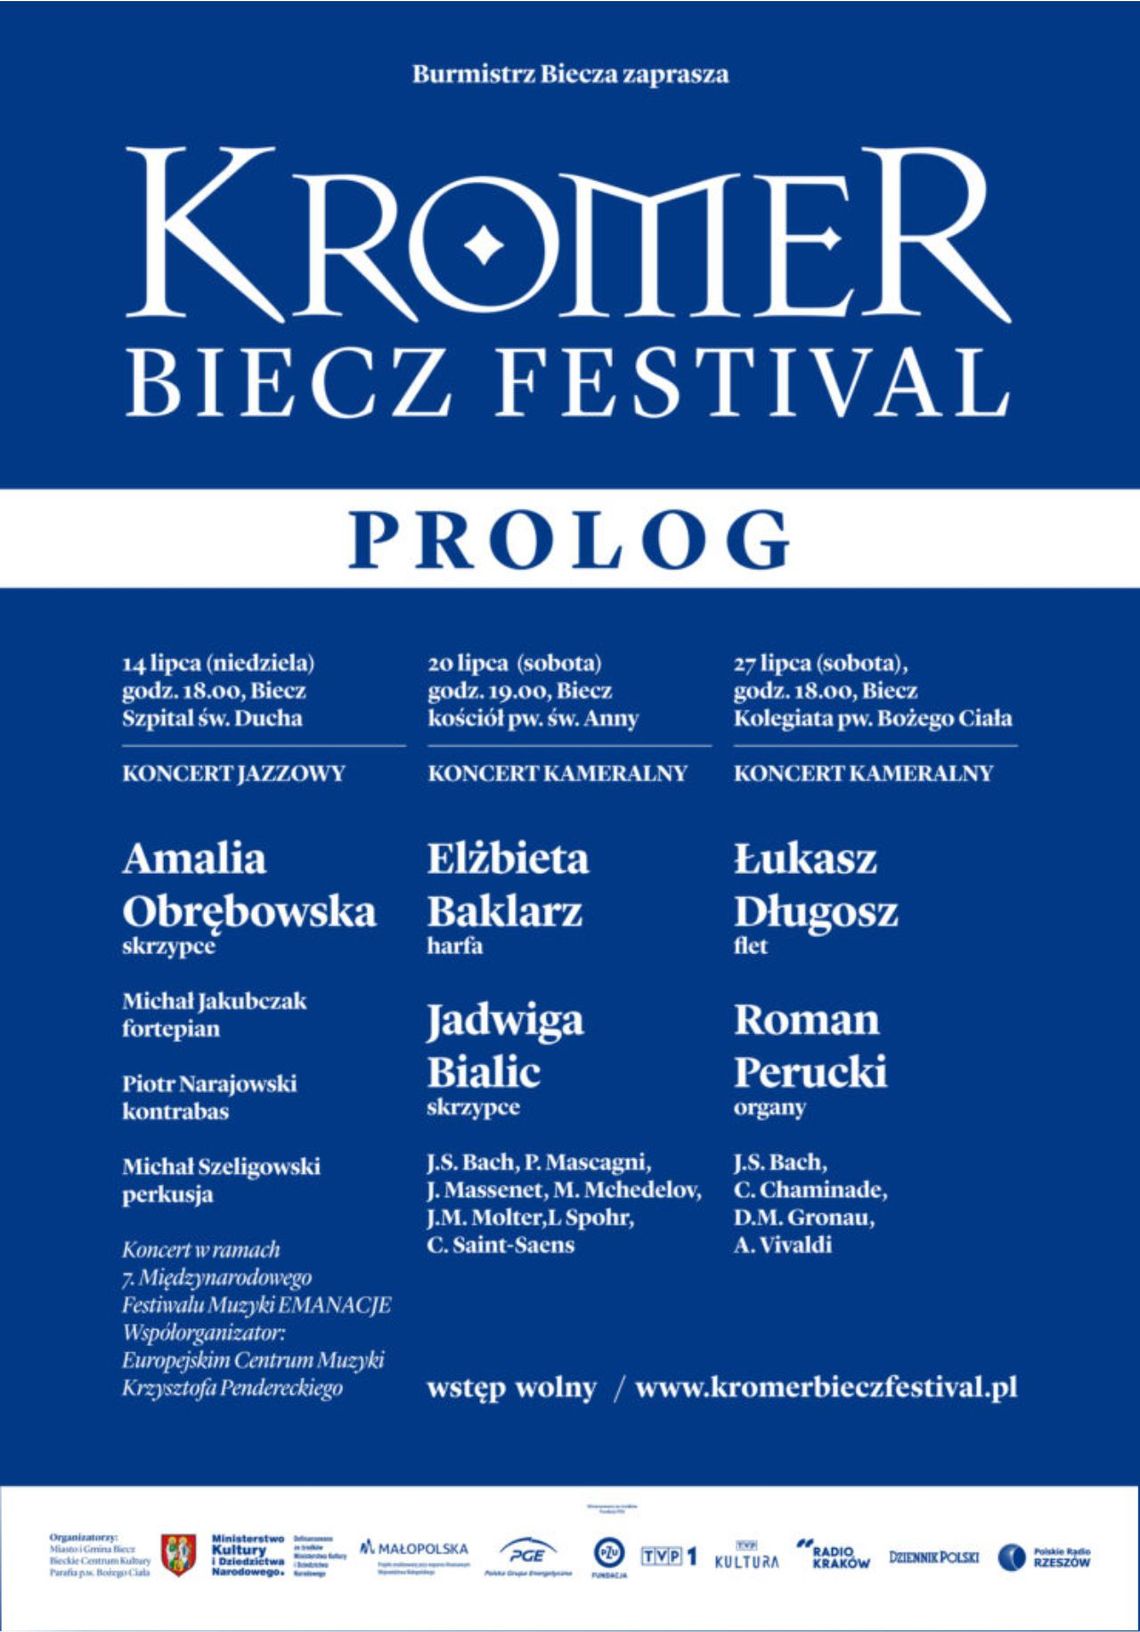 Prolog Kromer Biecz Festivalu